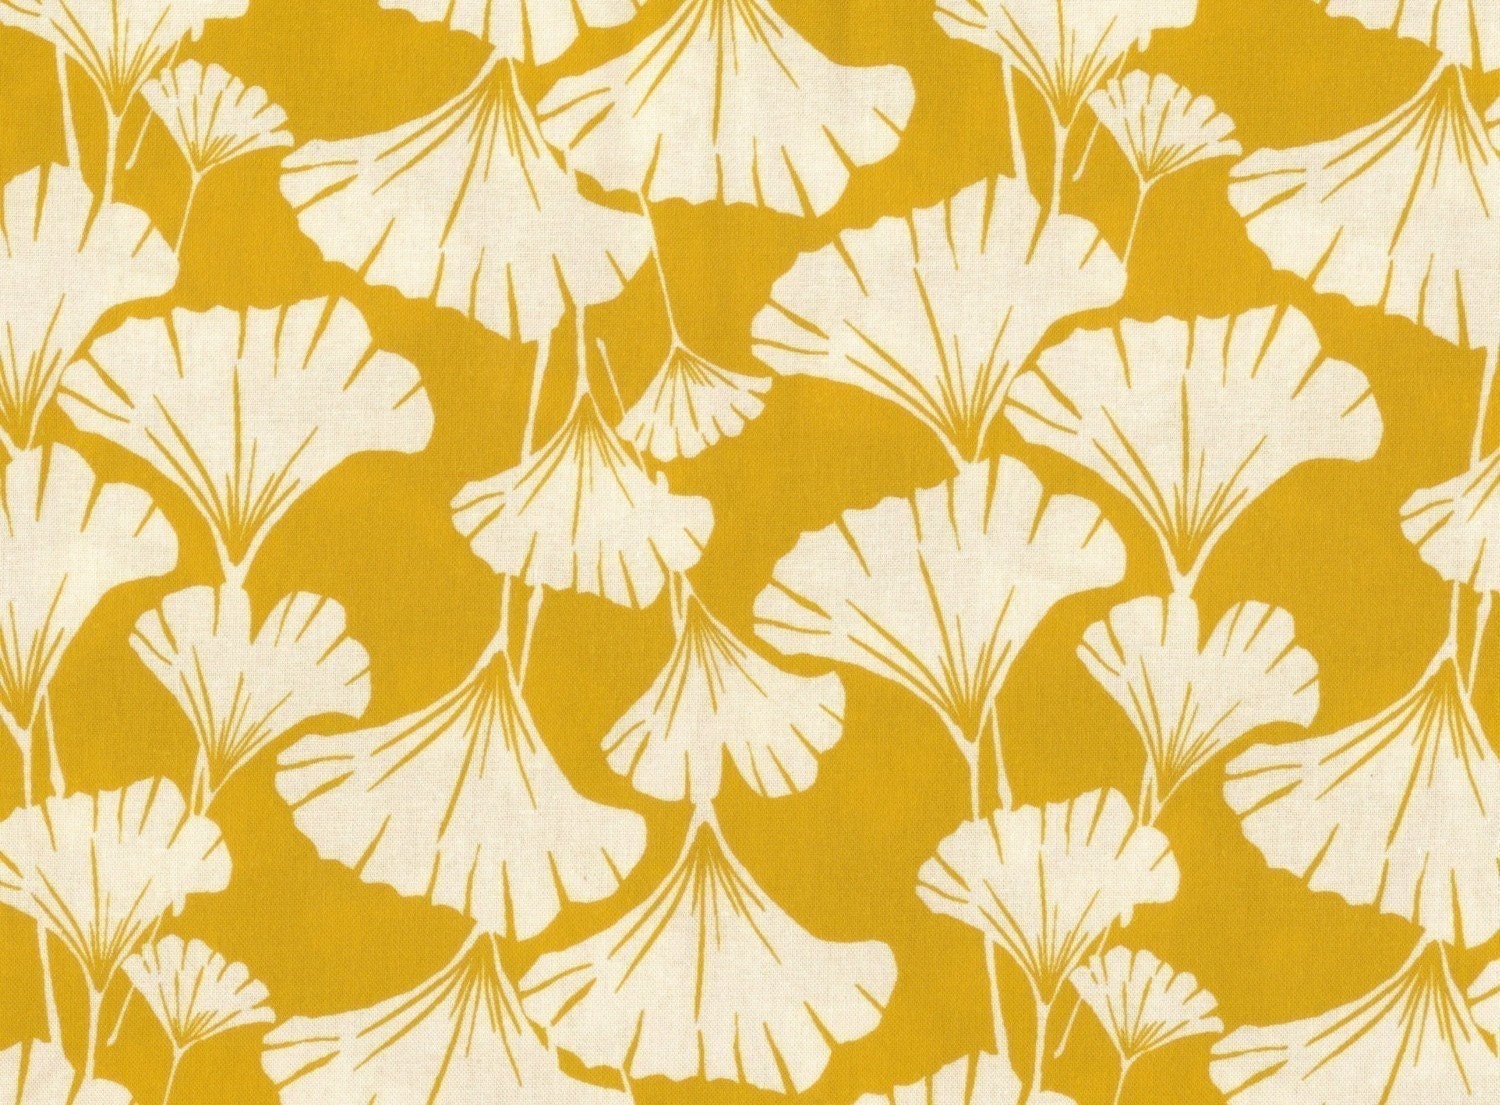 ginkgo leaves print fabric -mustard yellow- Organic cotton fabric - 18" x 28" Wide fat quarter